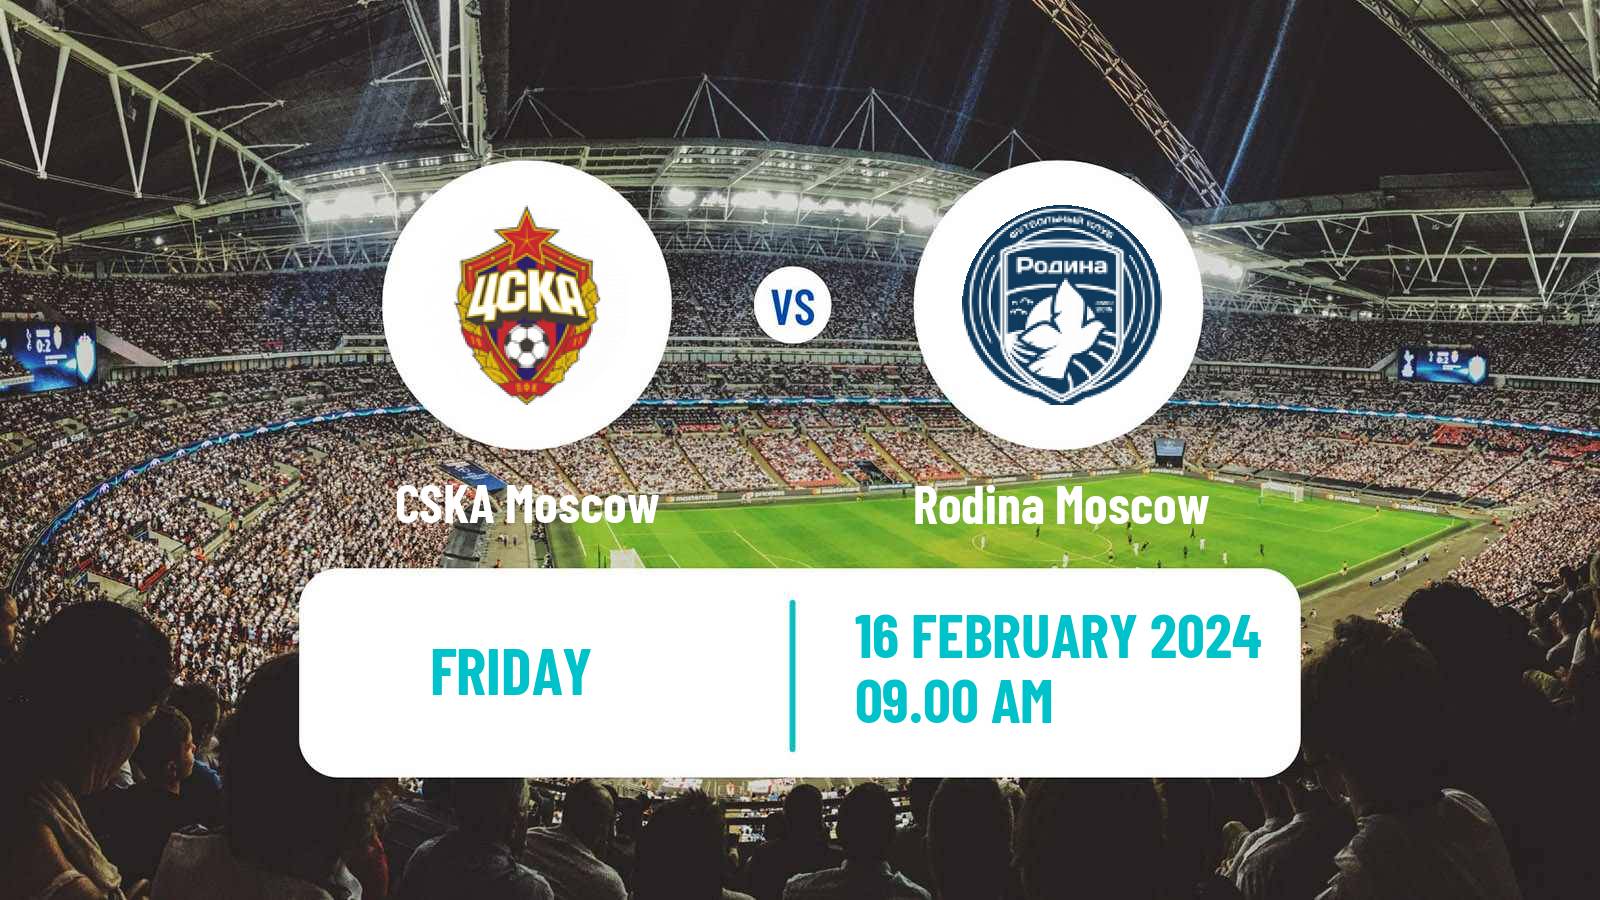 Soccer Club Friendly CSKA Moscow - Rodina Moscow